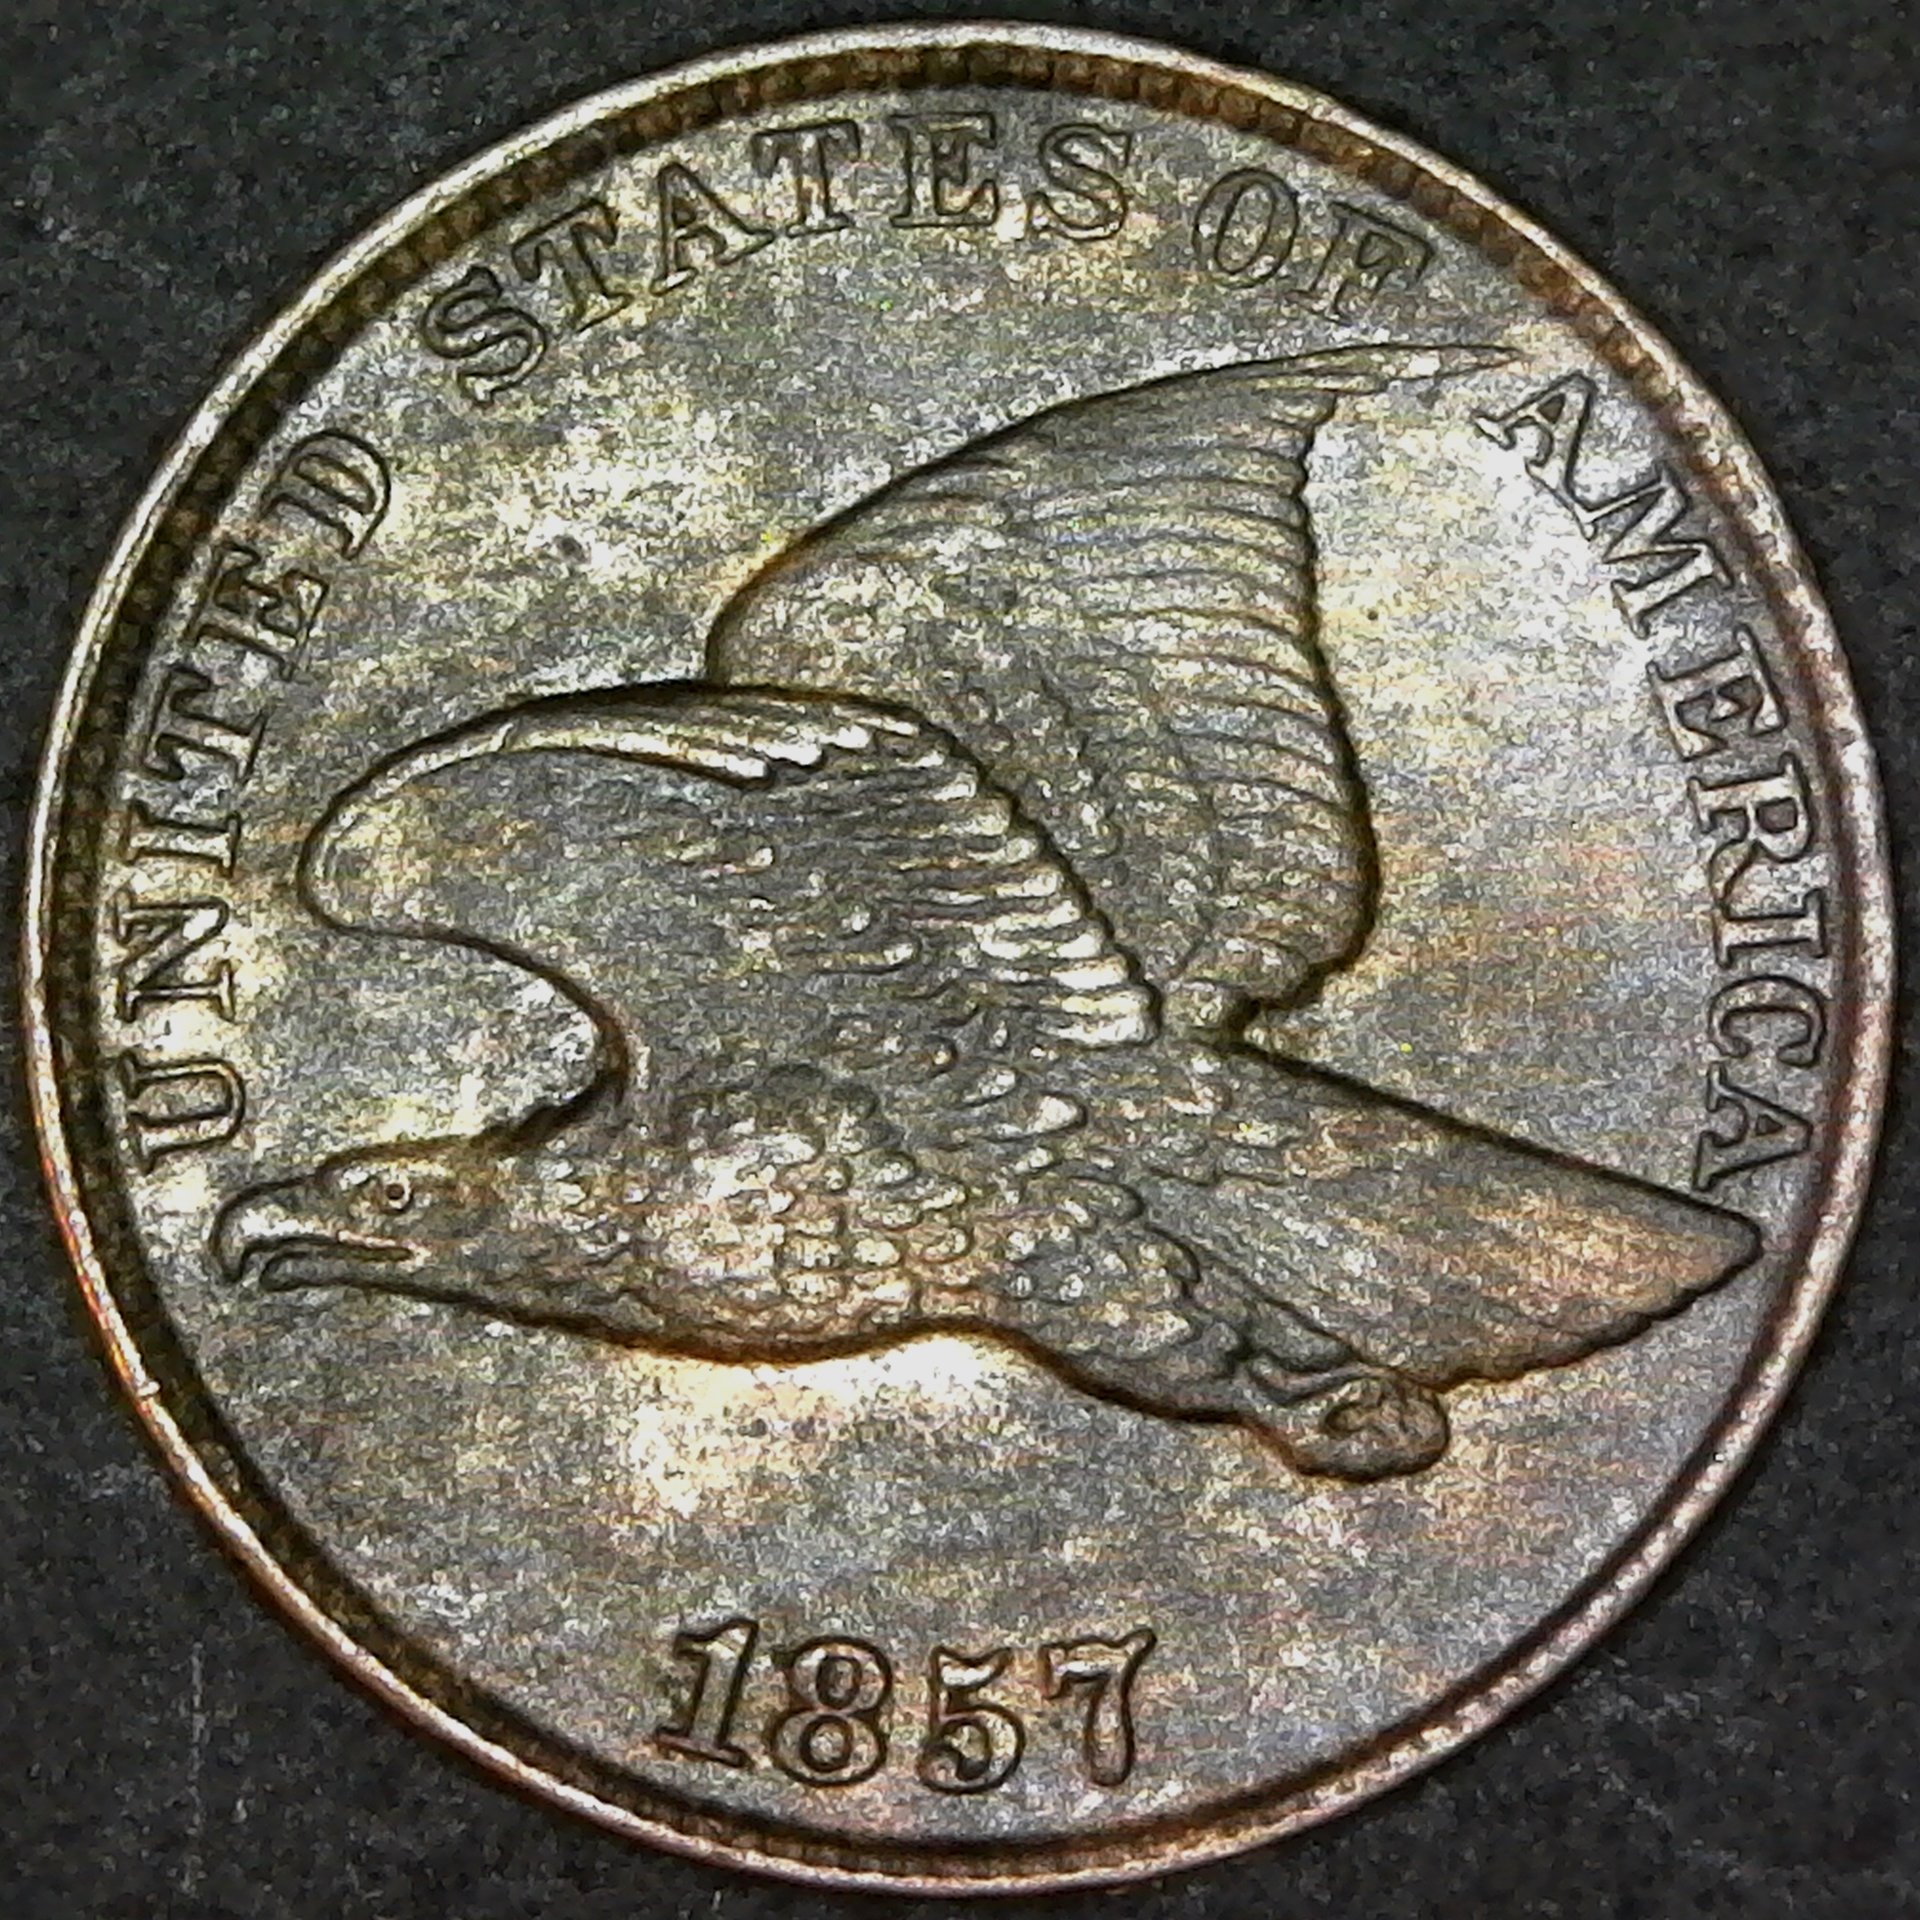 United States One Cent 1857 obv.jpg